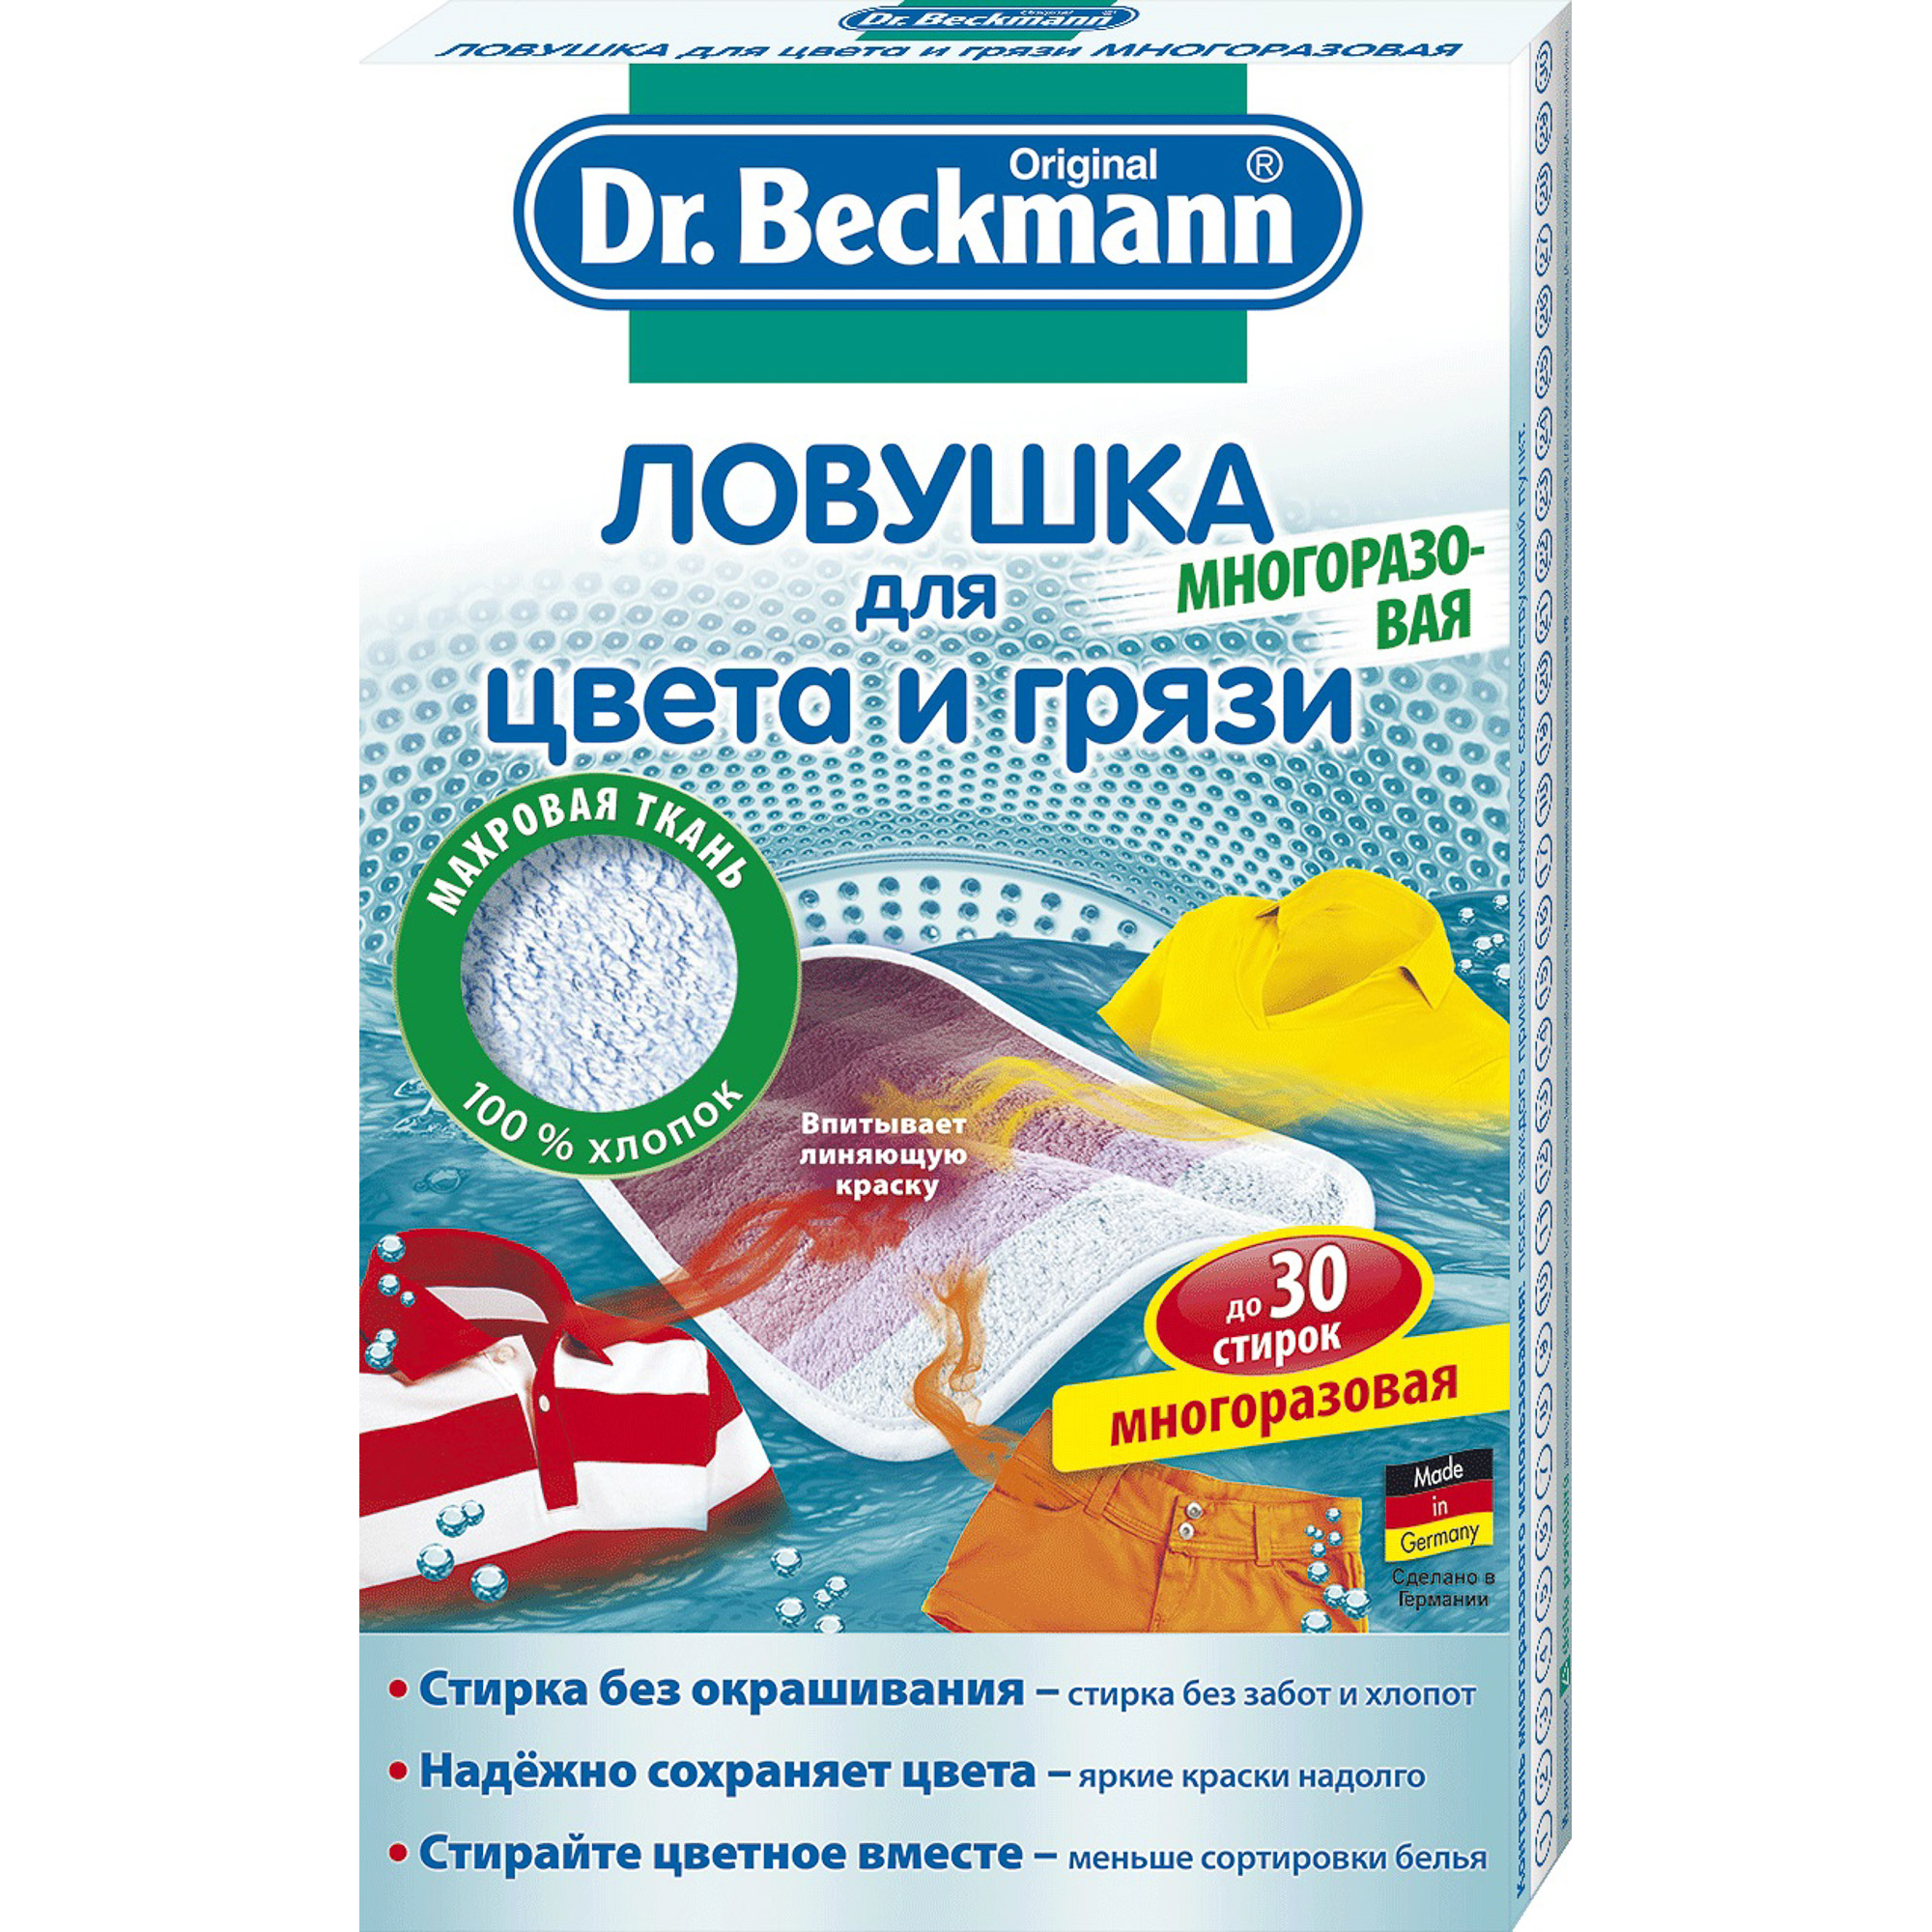 Ловушка для цвета и грязи Dr.Beckmann многоразовая мухояр ловушка для ос мух вставка в бутылку 1 шт